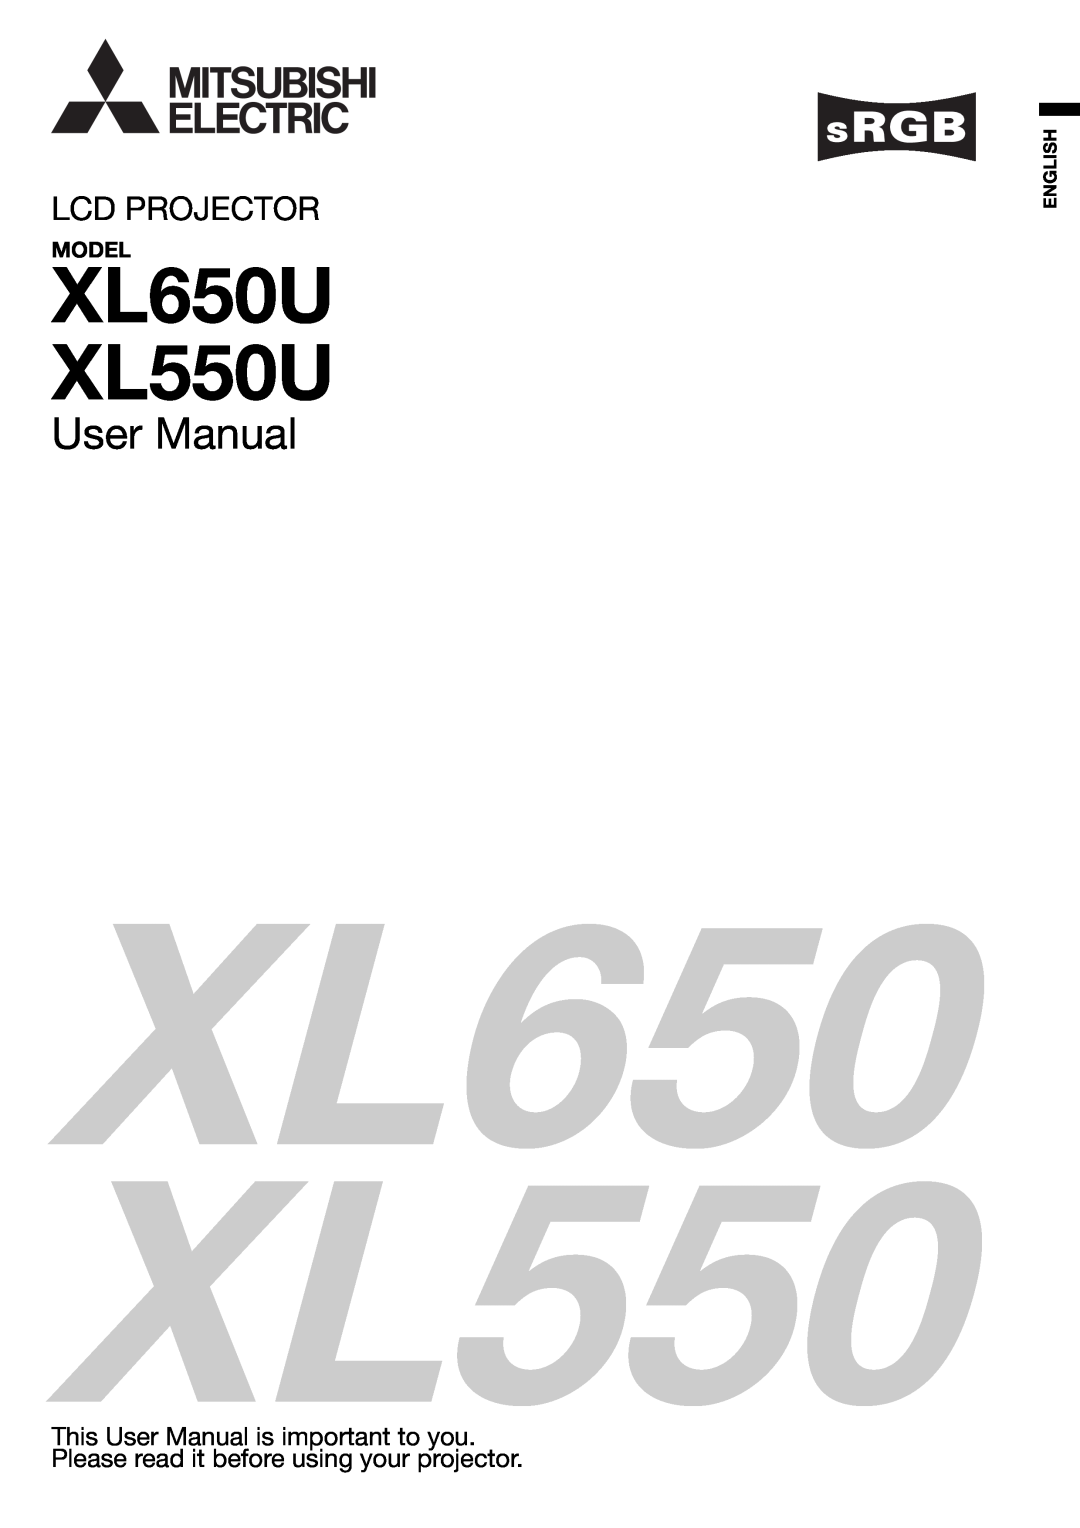 Mitsubishi Electronics user manual XL650 XL550, XL650U XL550U, User Manual, Lcd Projector, English 